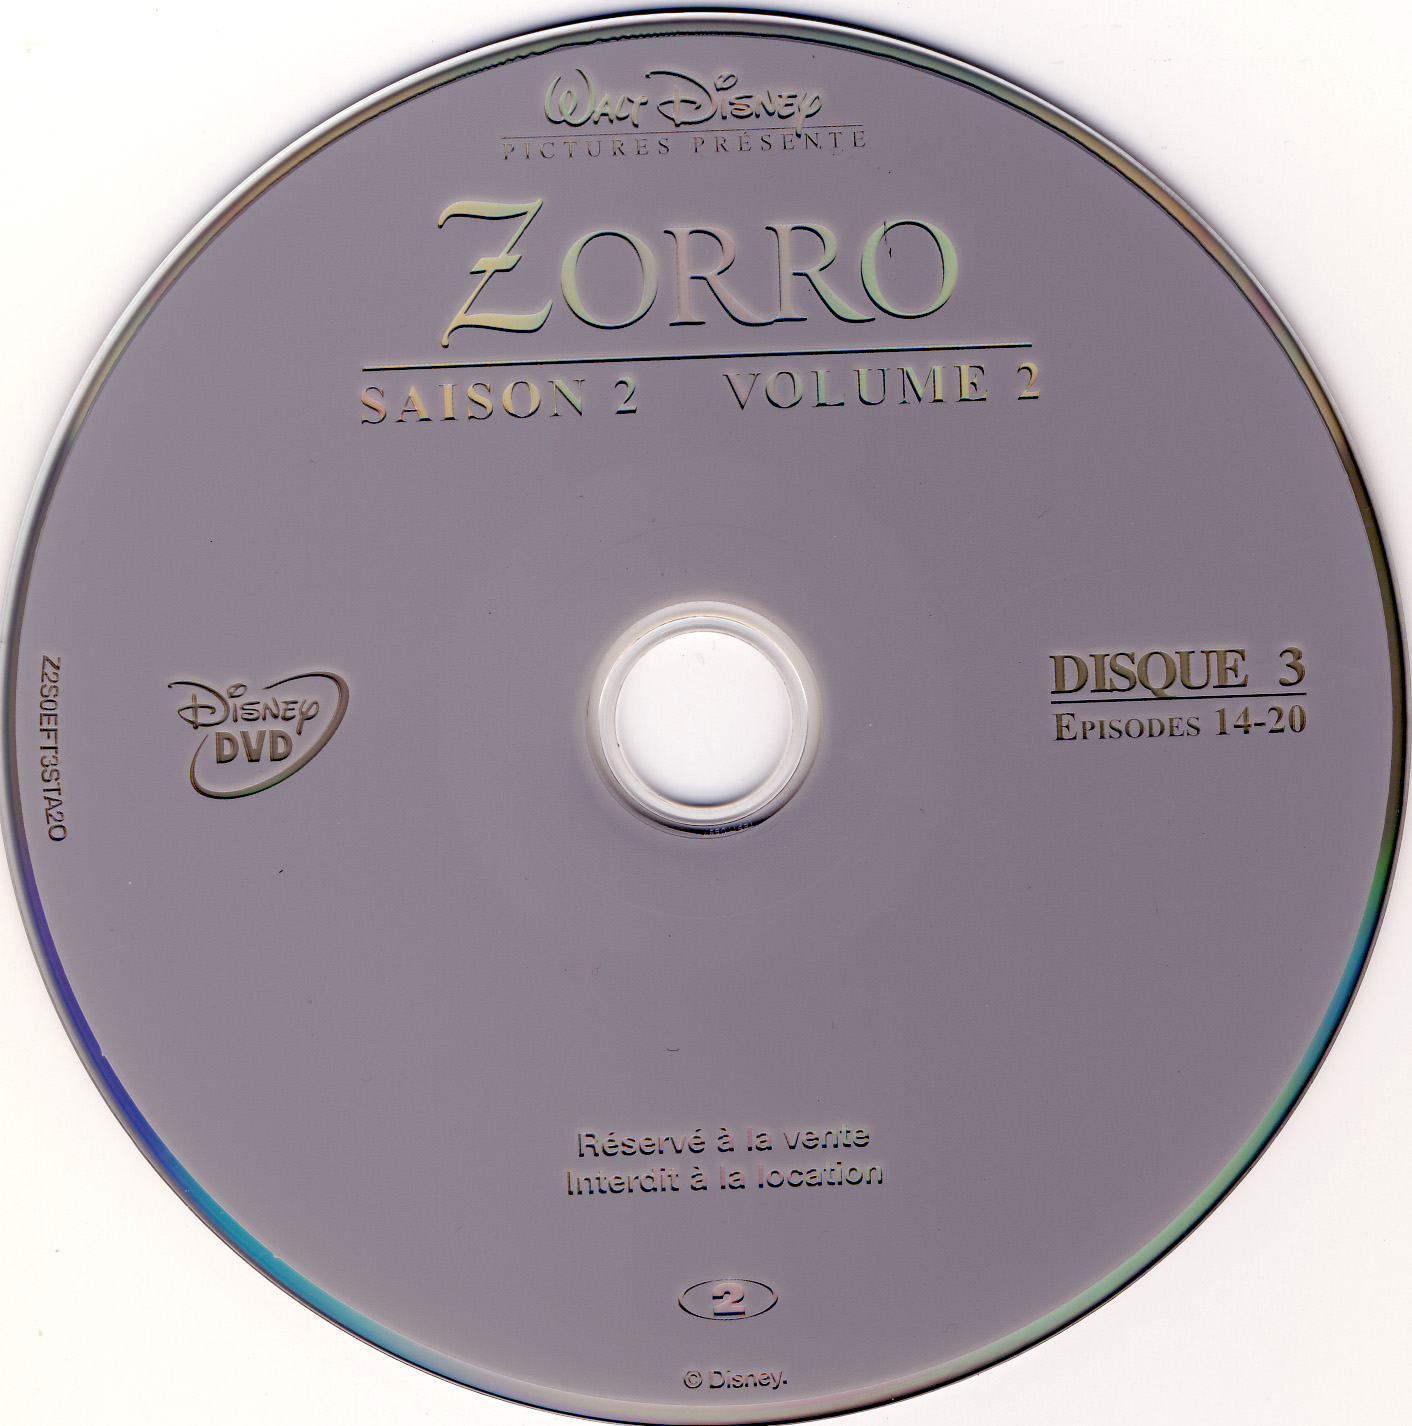 Zorro Saison 2 vol 2 DISC 3